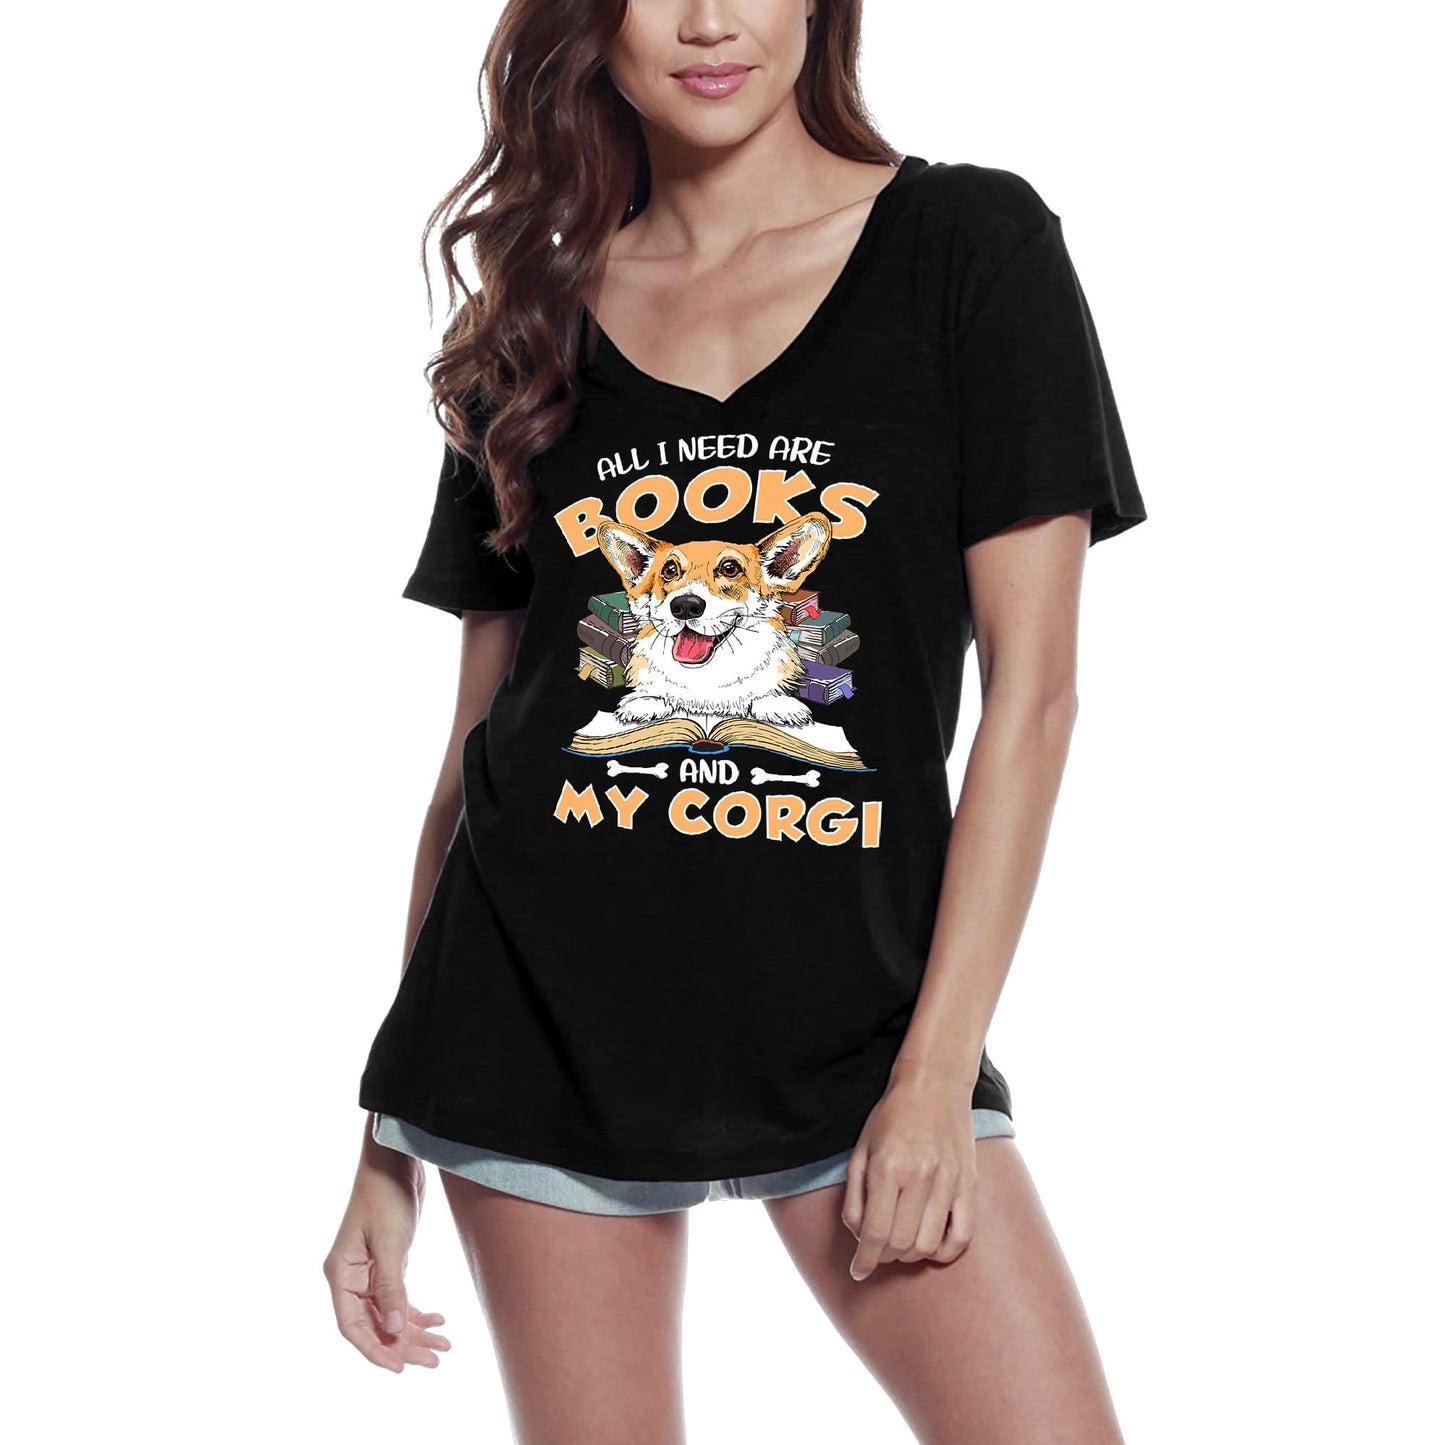 ULTRABASIC Women's T-Shirt All I Need Are Books and My Corgi - Cute Dog Tee Shirt